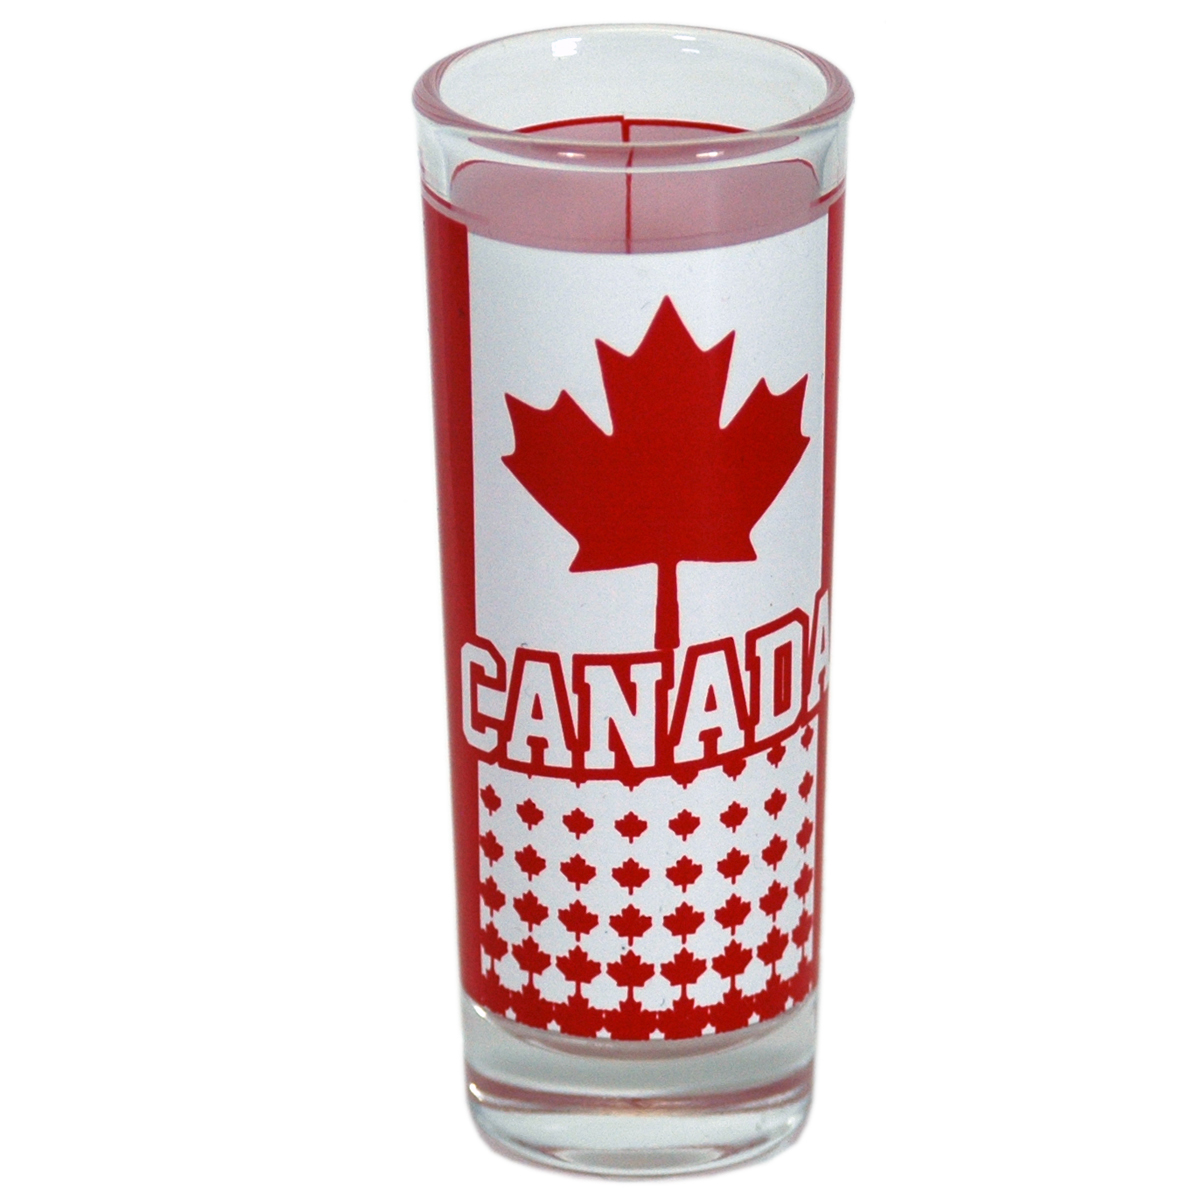 Canada Shooter Glass Souvenir 89996JE Unique Modern Design Canadian Maple Leaf Flag Shot Glassware Collectible 3-Ounce